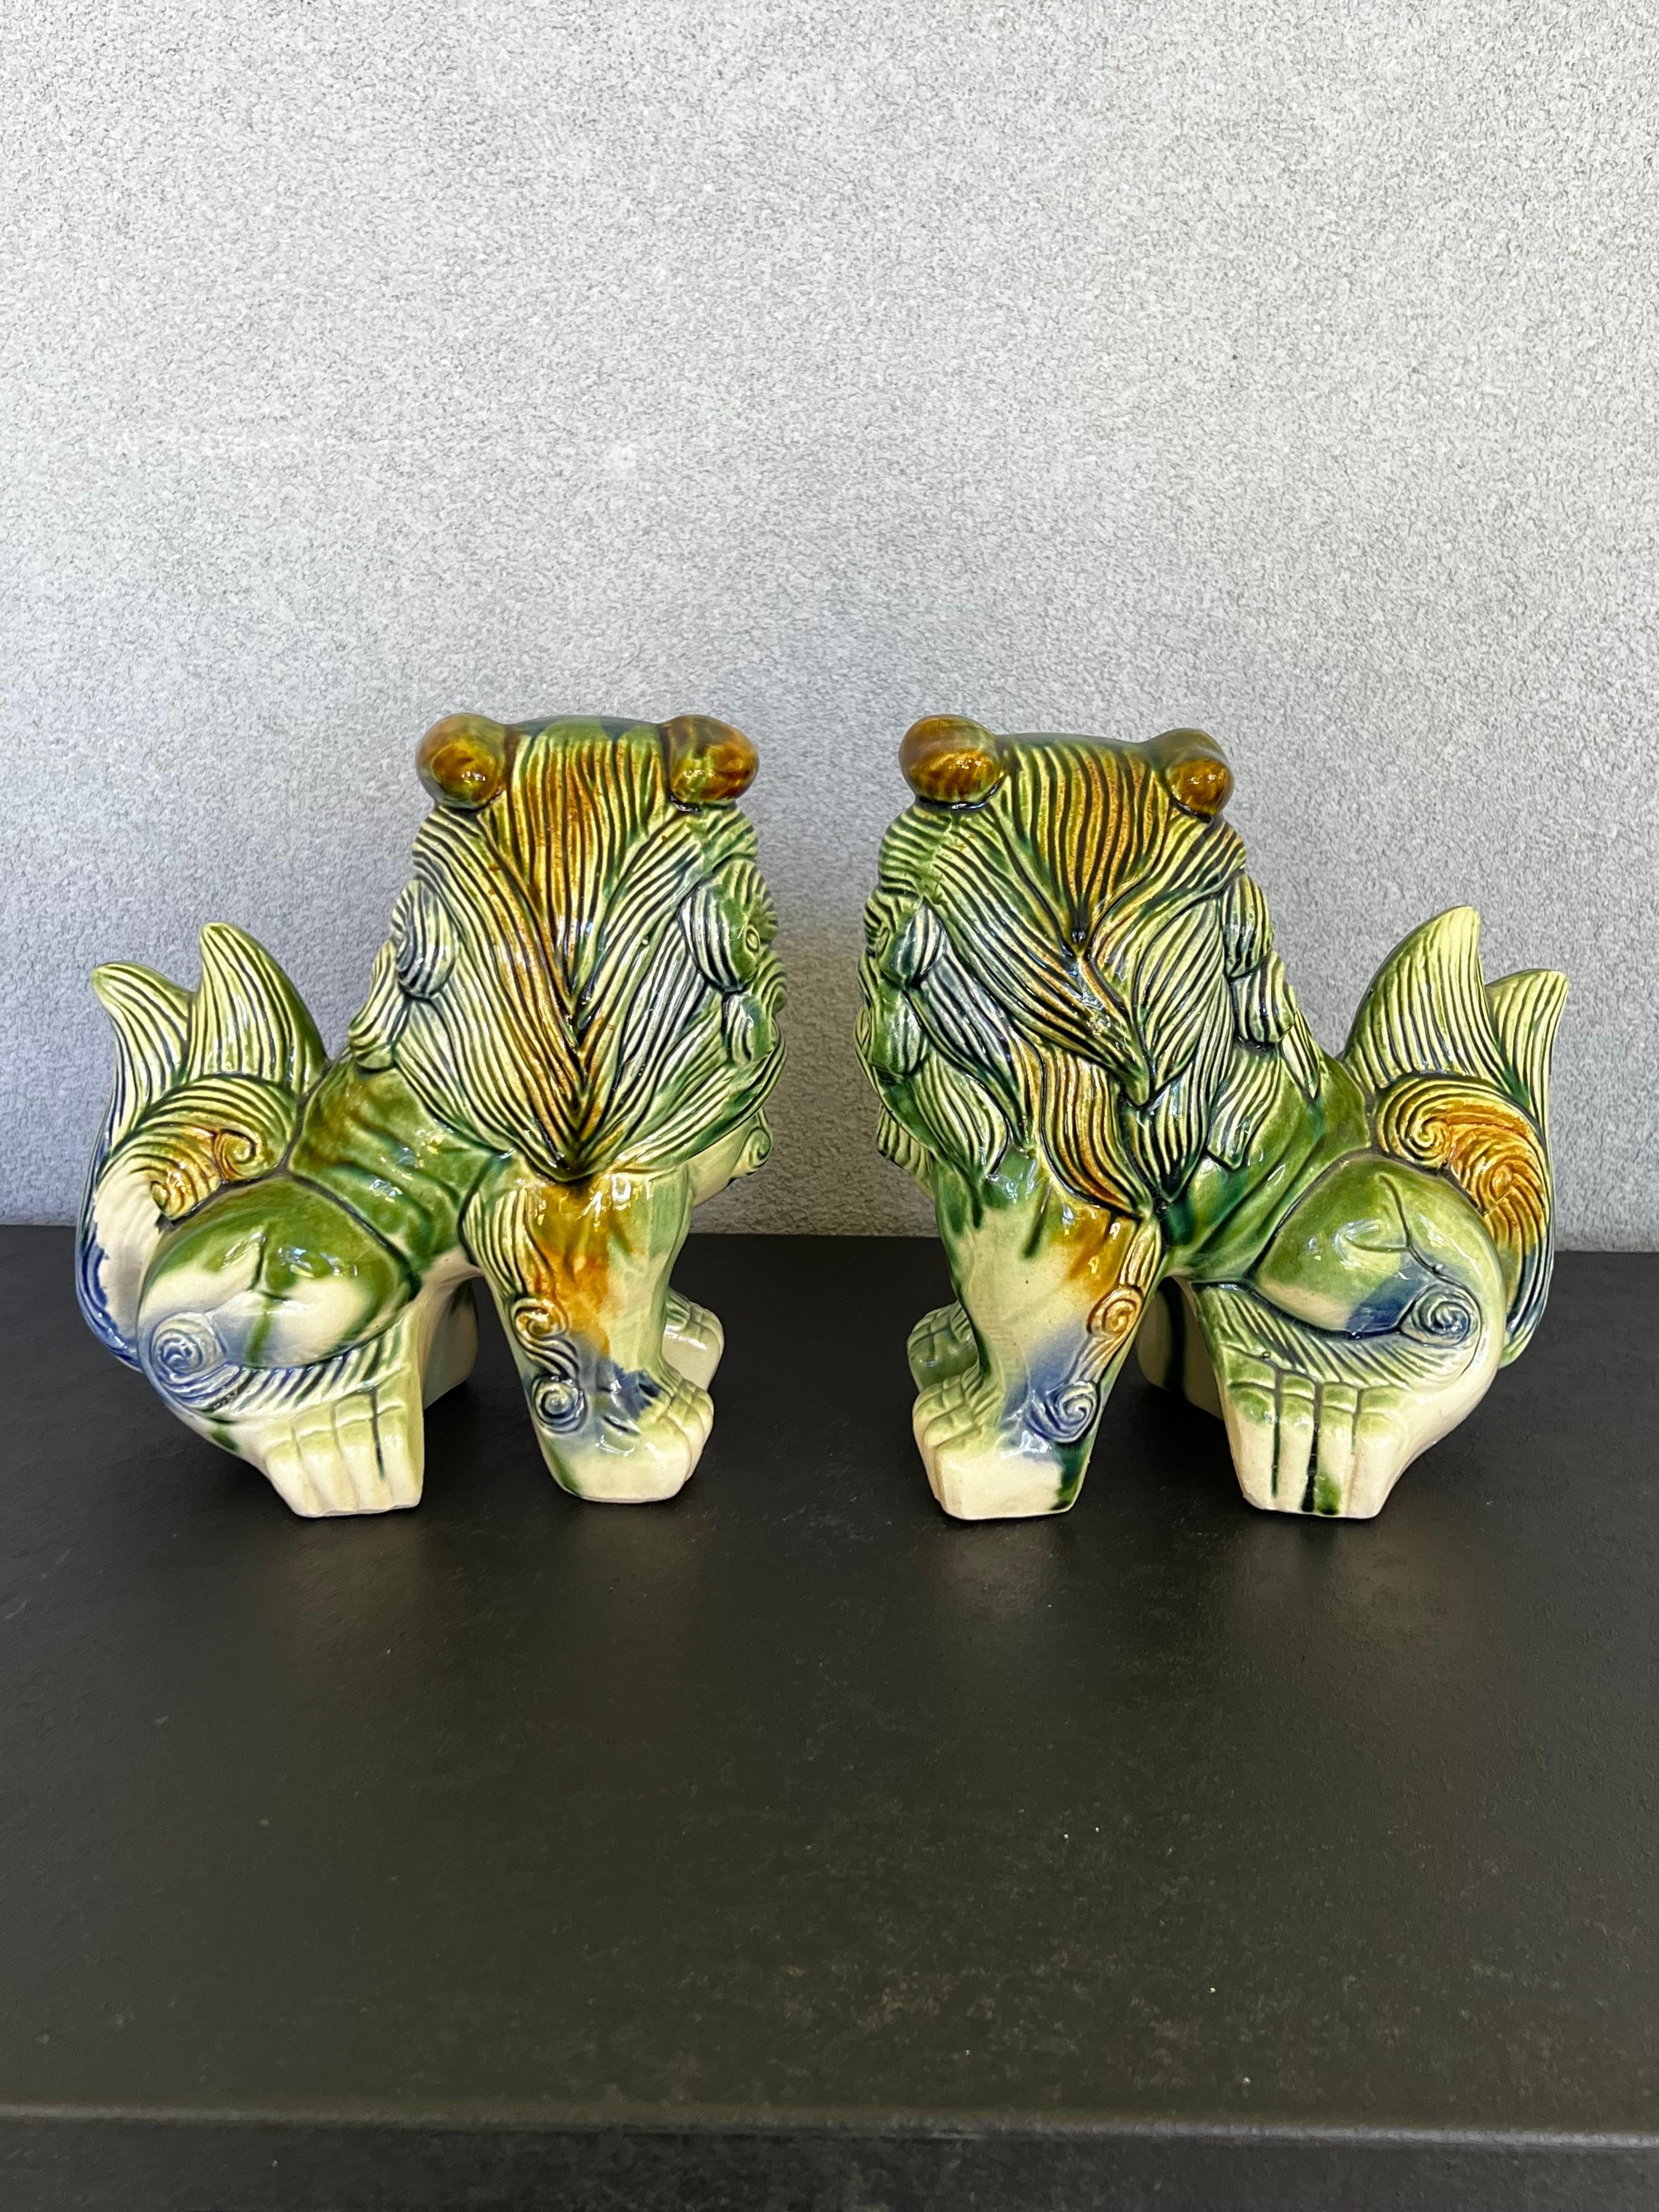 20th Century Chinese Polychrome Ceramic Glaze Foo Dogs - a Pair